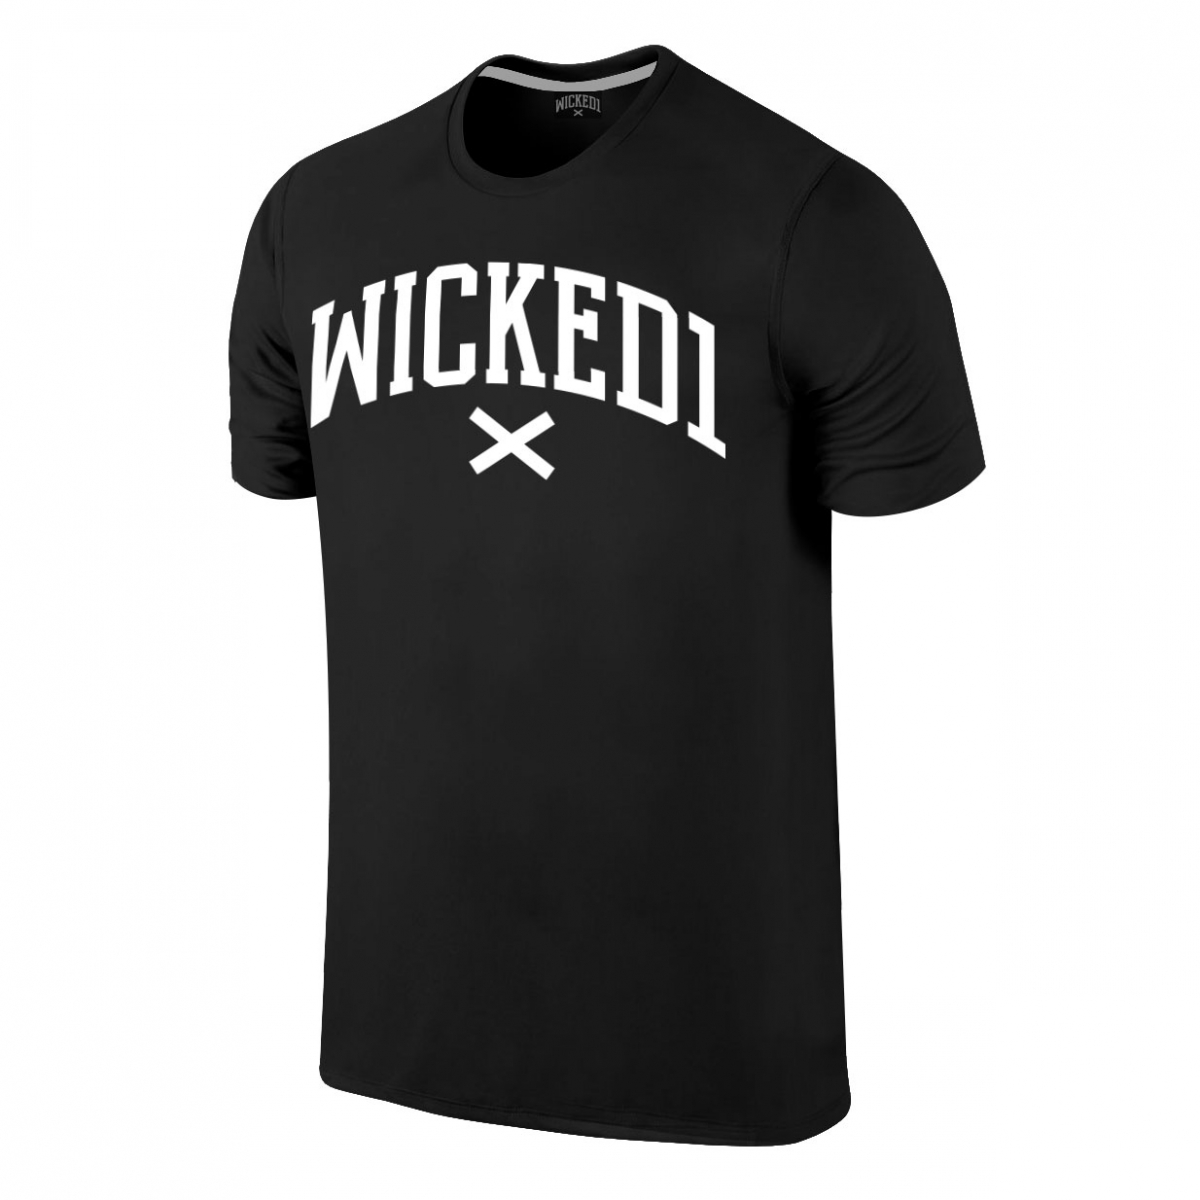 t-shirt Wicked one cross